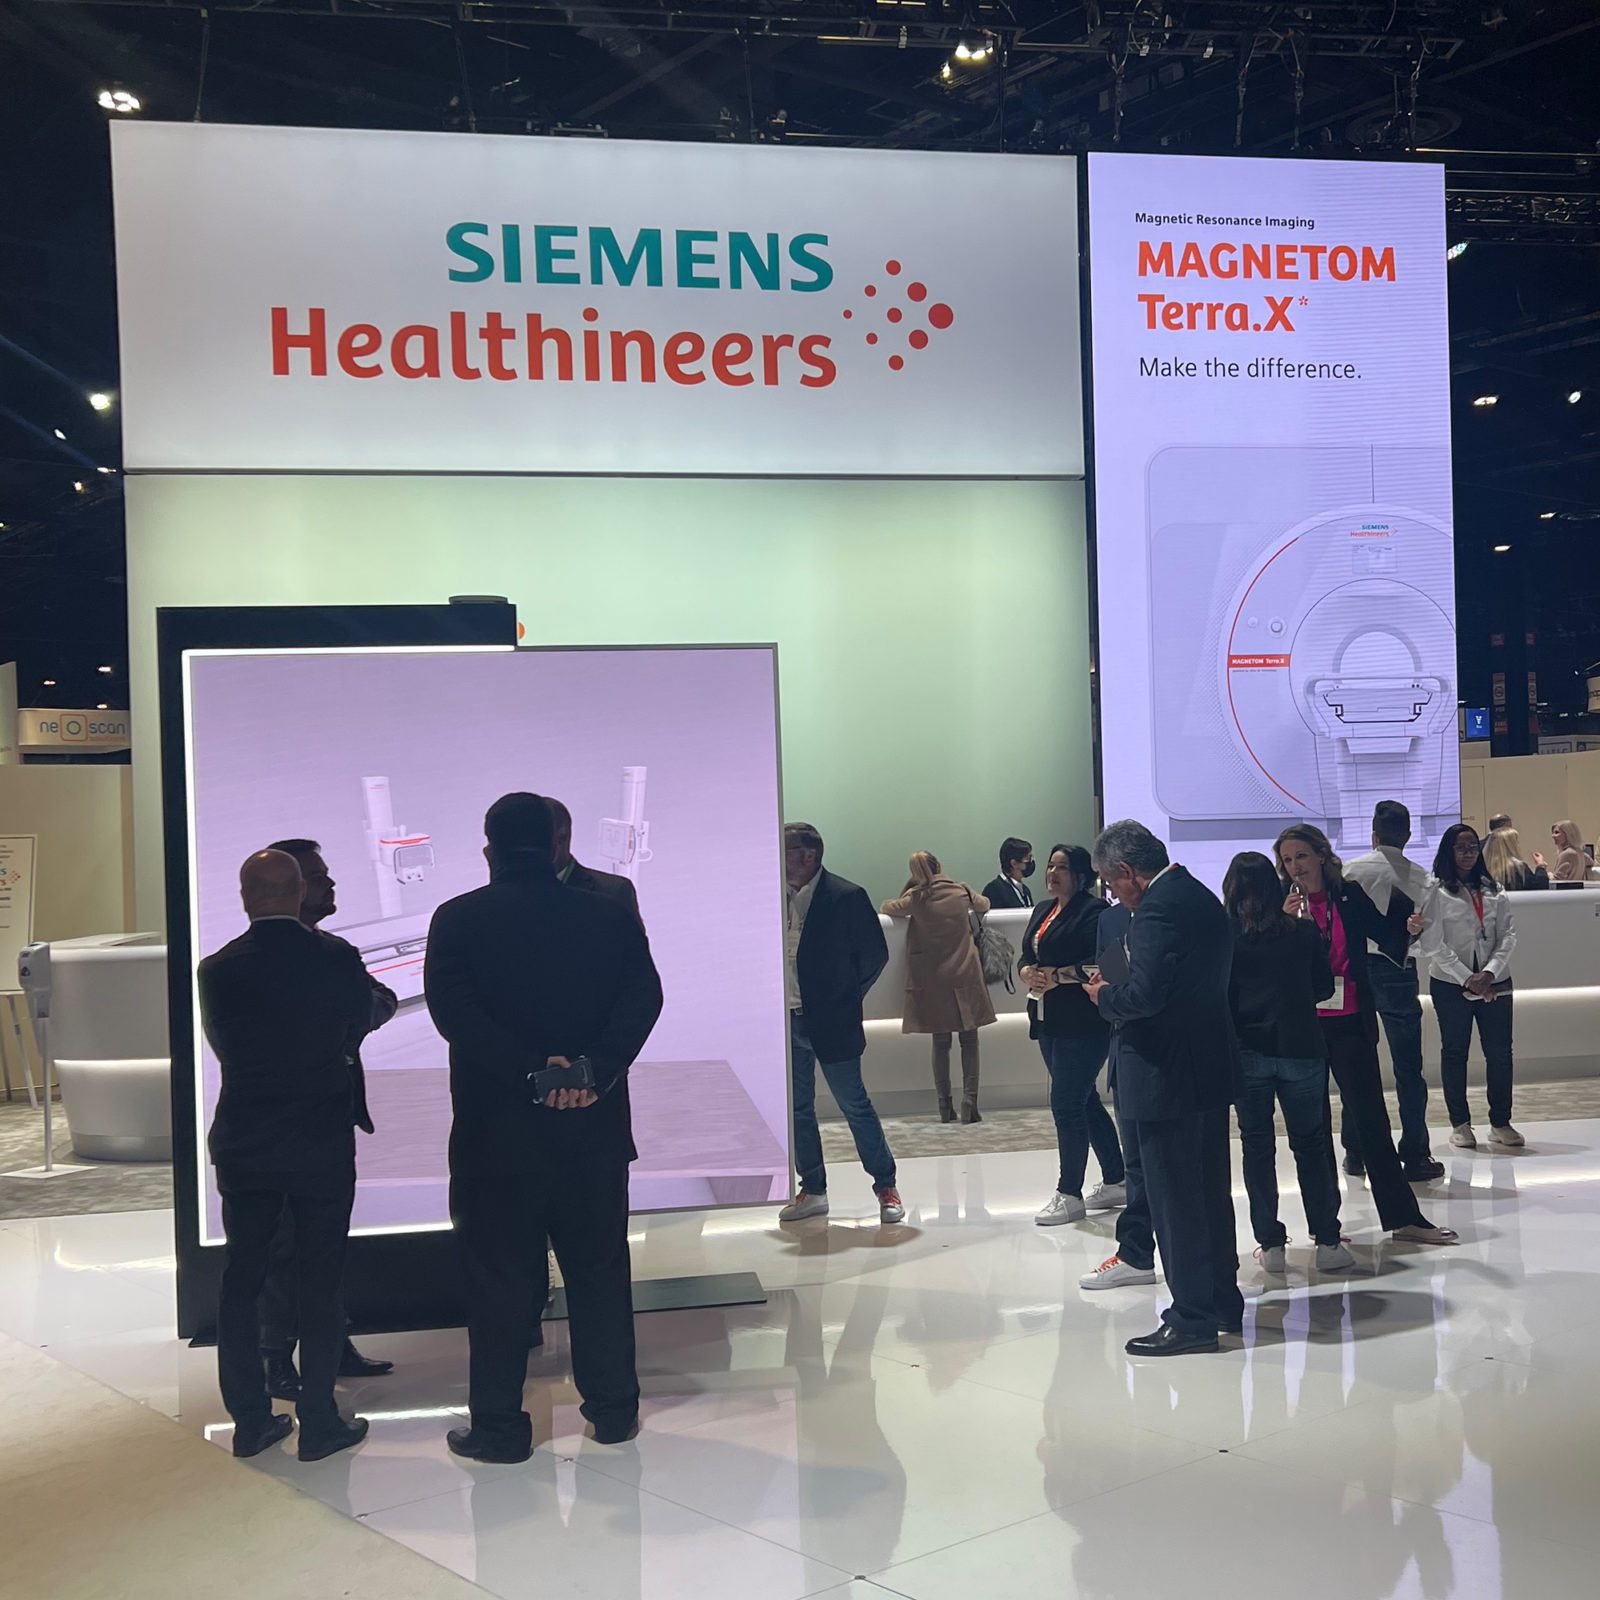 Siemens Healthineers' exhibit at RSNA